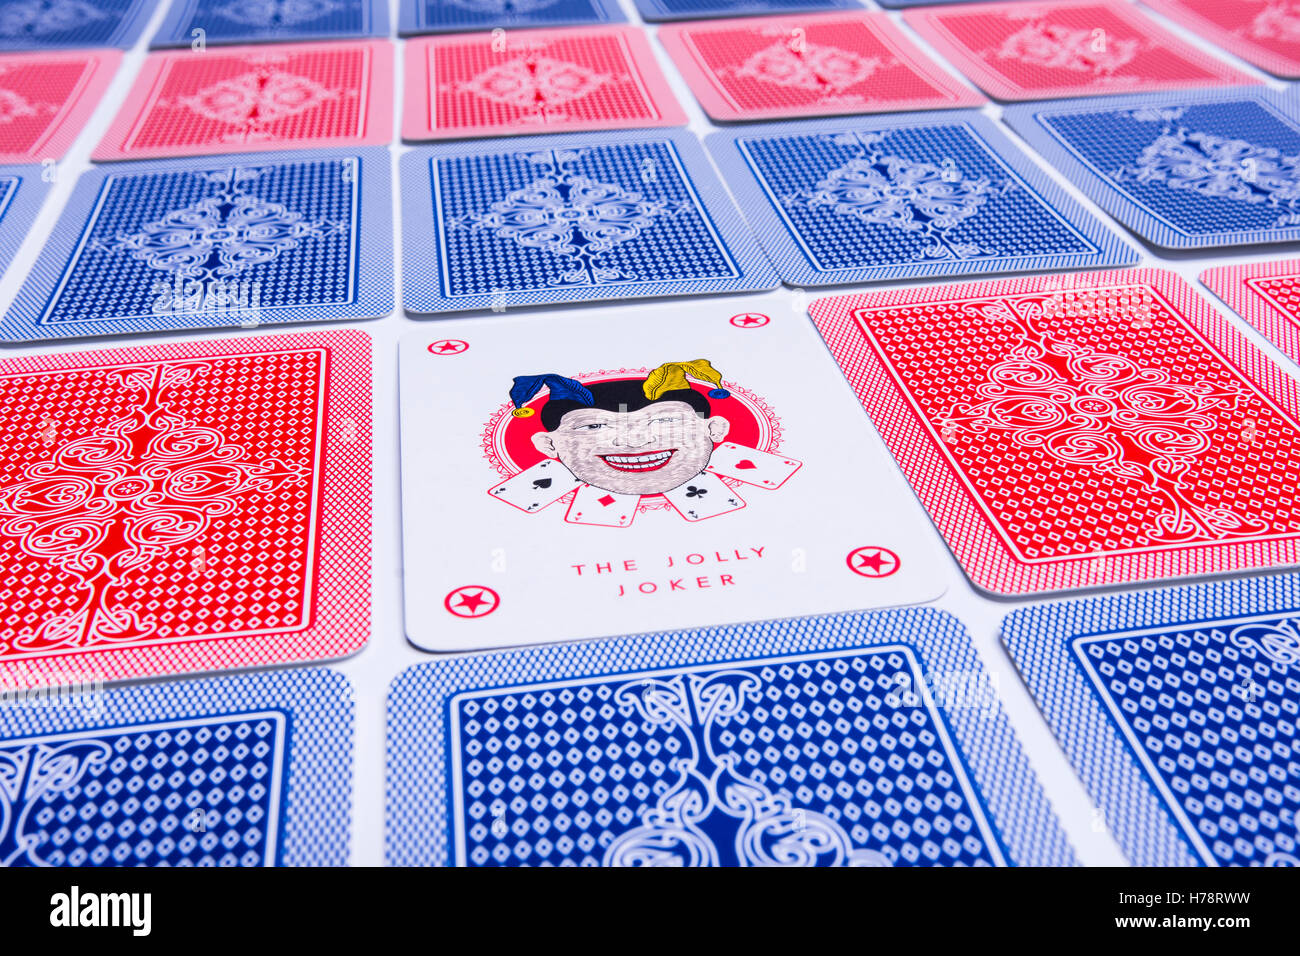 joker card among some playing cards Stock Photo